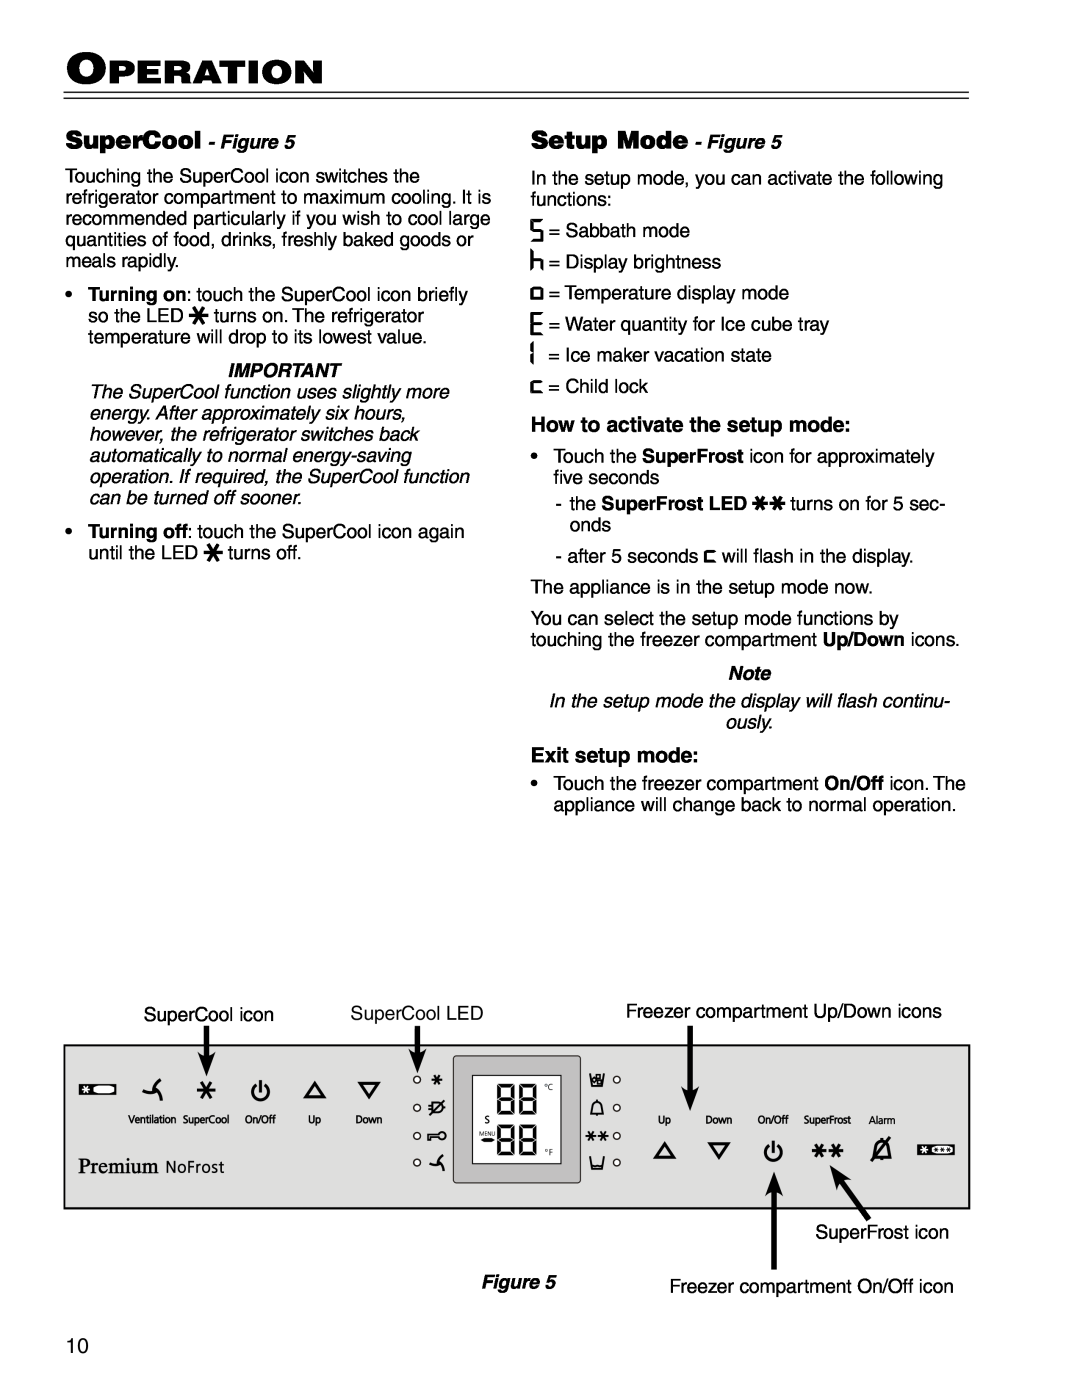 Liebherr CS 1640 7082 481-01 SuperCool - Figure, Setup Mode - Figure, How to activate the setup mode, Exit setup mode 